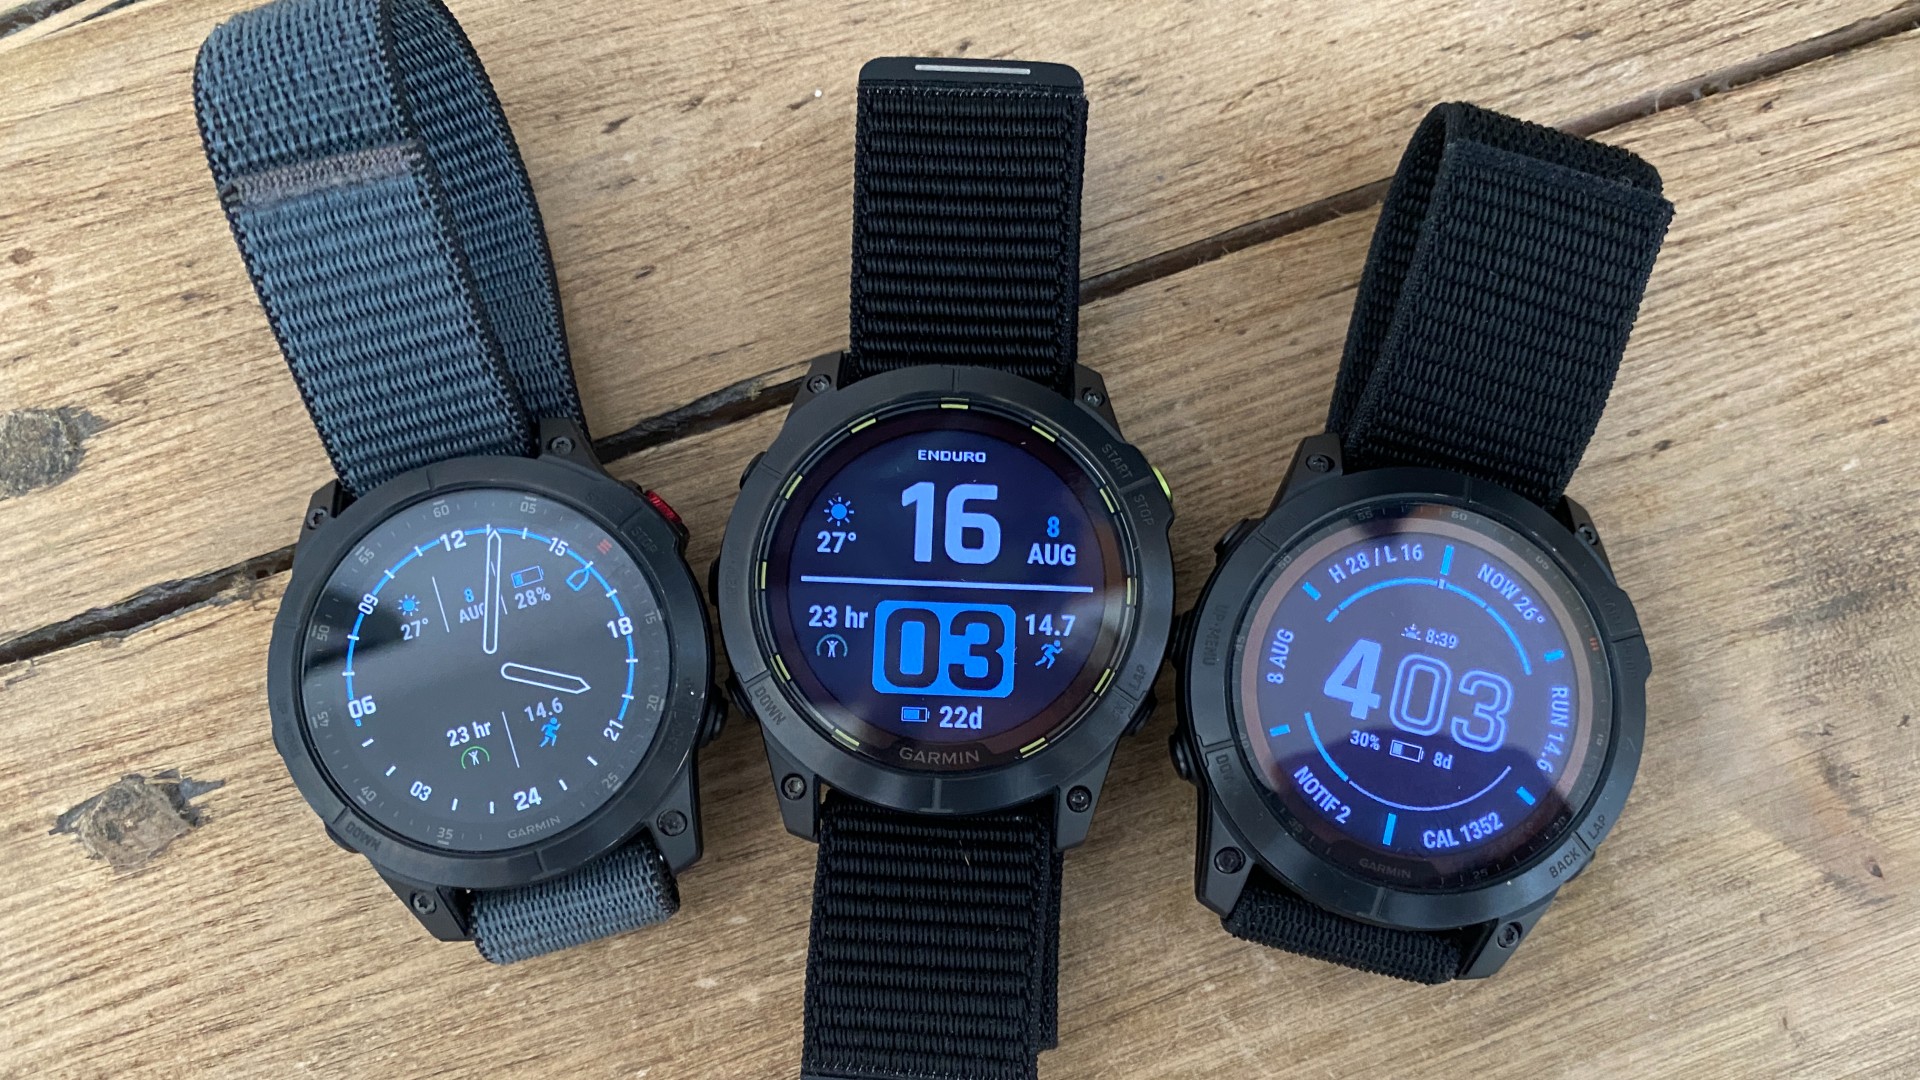 From left to right: Garmin Epix Gen 2, Garmin Enduro 2 multisport GPS watch, Garmin Fenix 7X